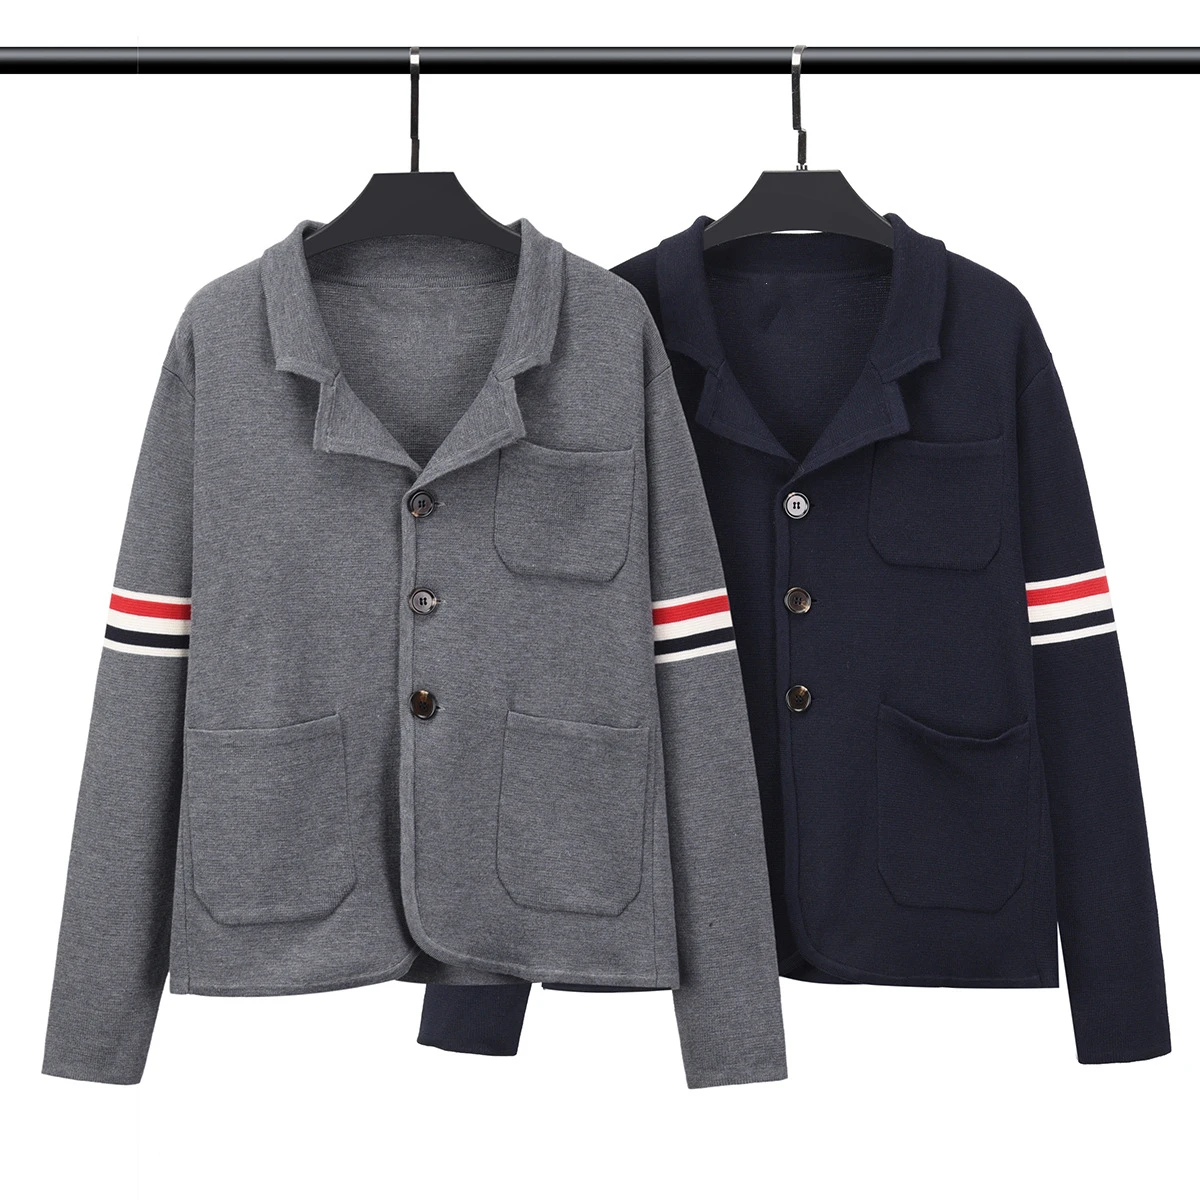 

TB THOM Blazer Sets 2022 Korean Fashion Jackets Armband Stripes Notched Collar Coat Formal Business Casual Suit Jacket